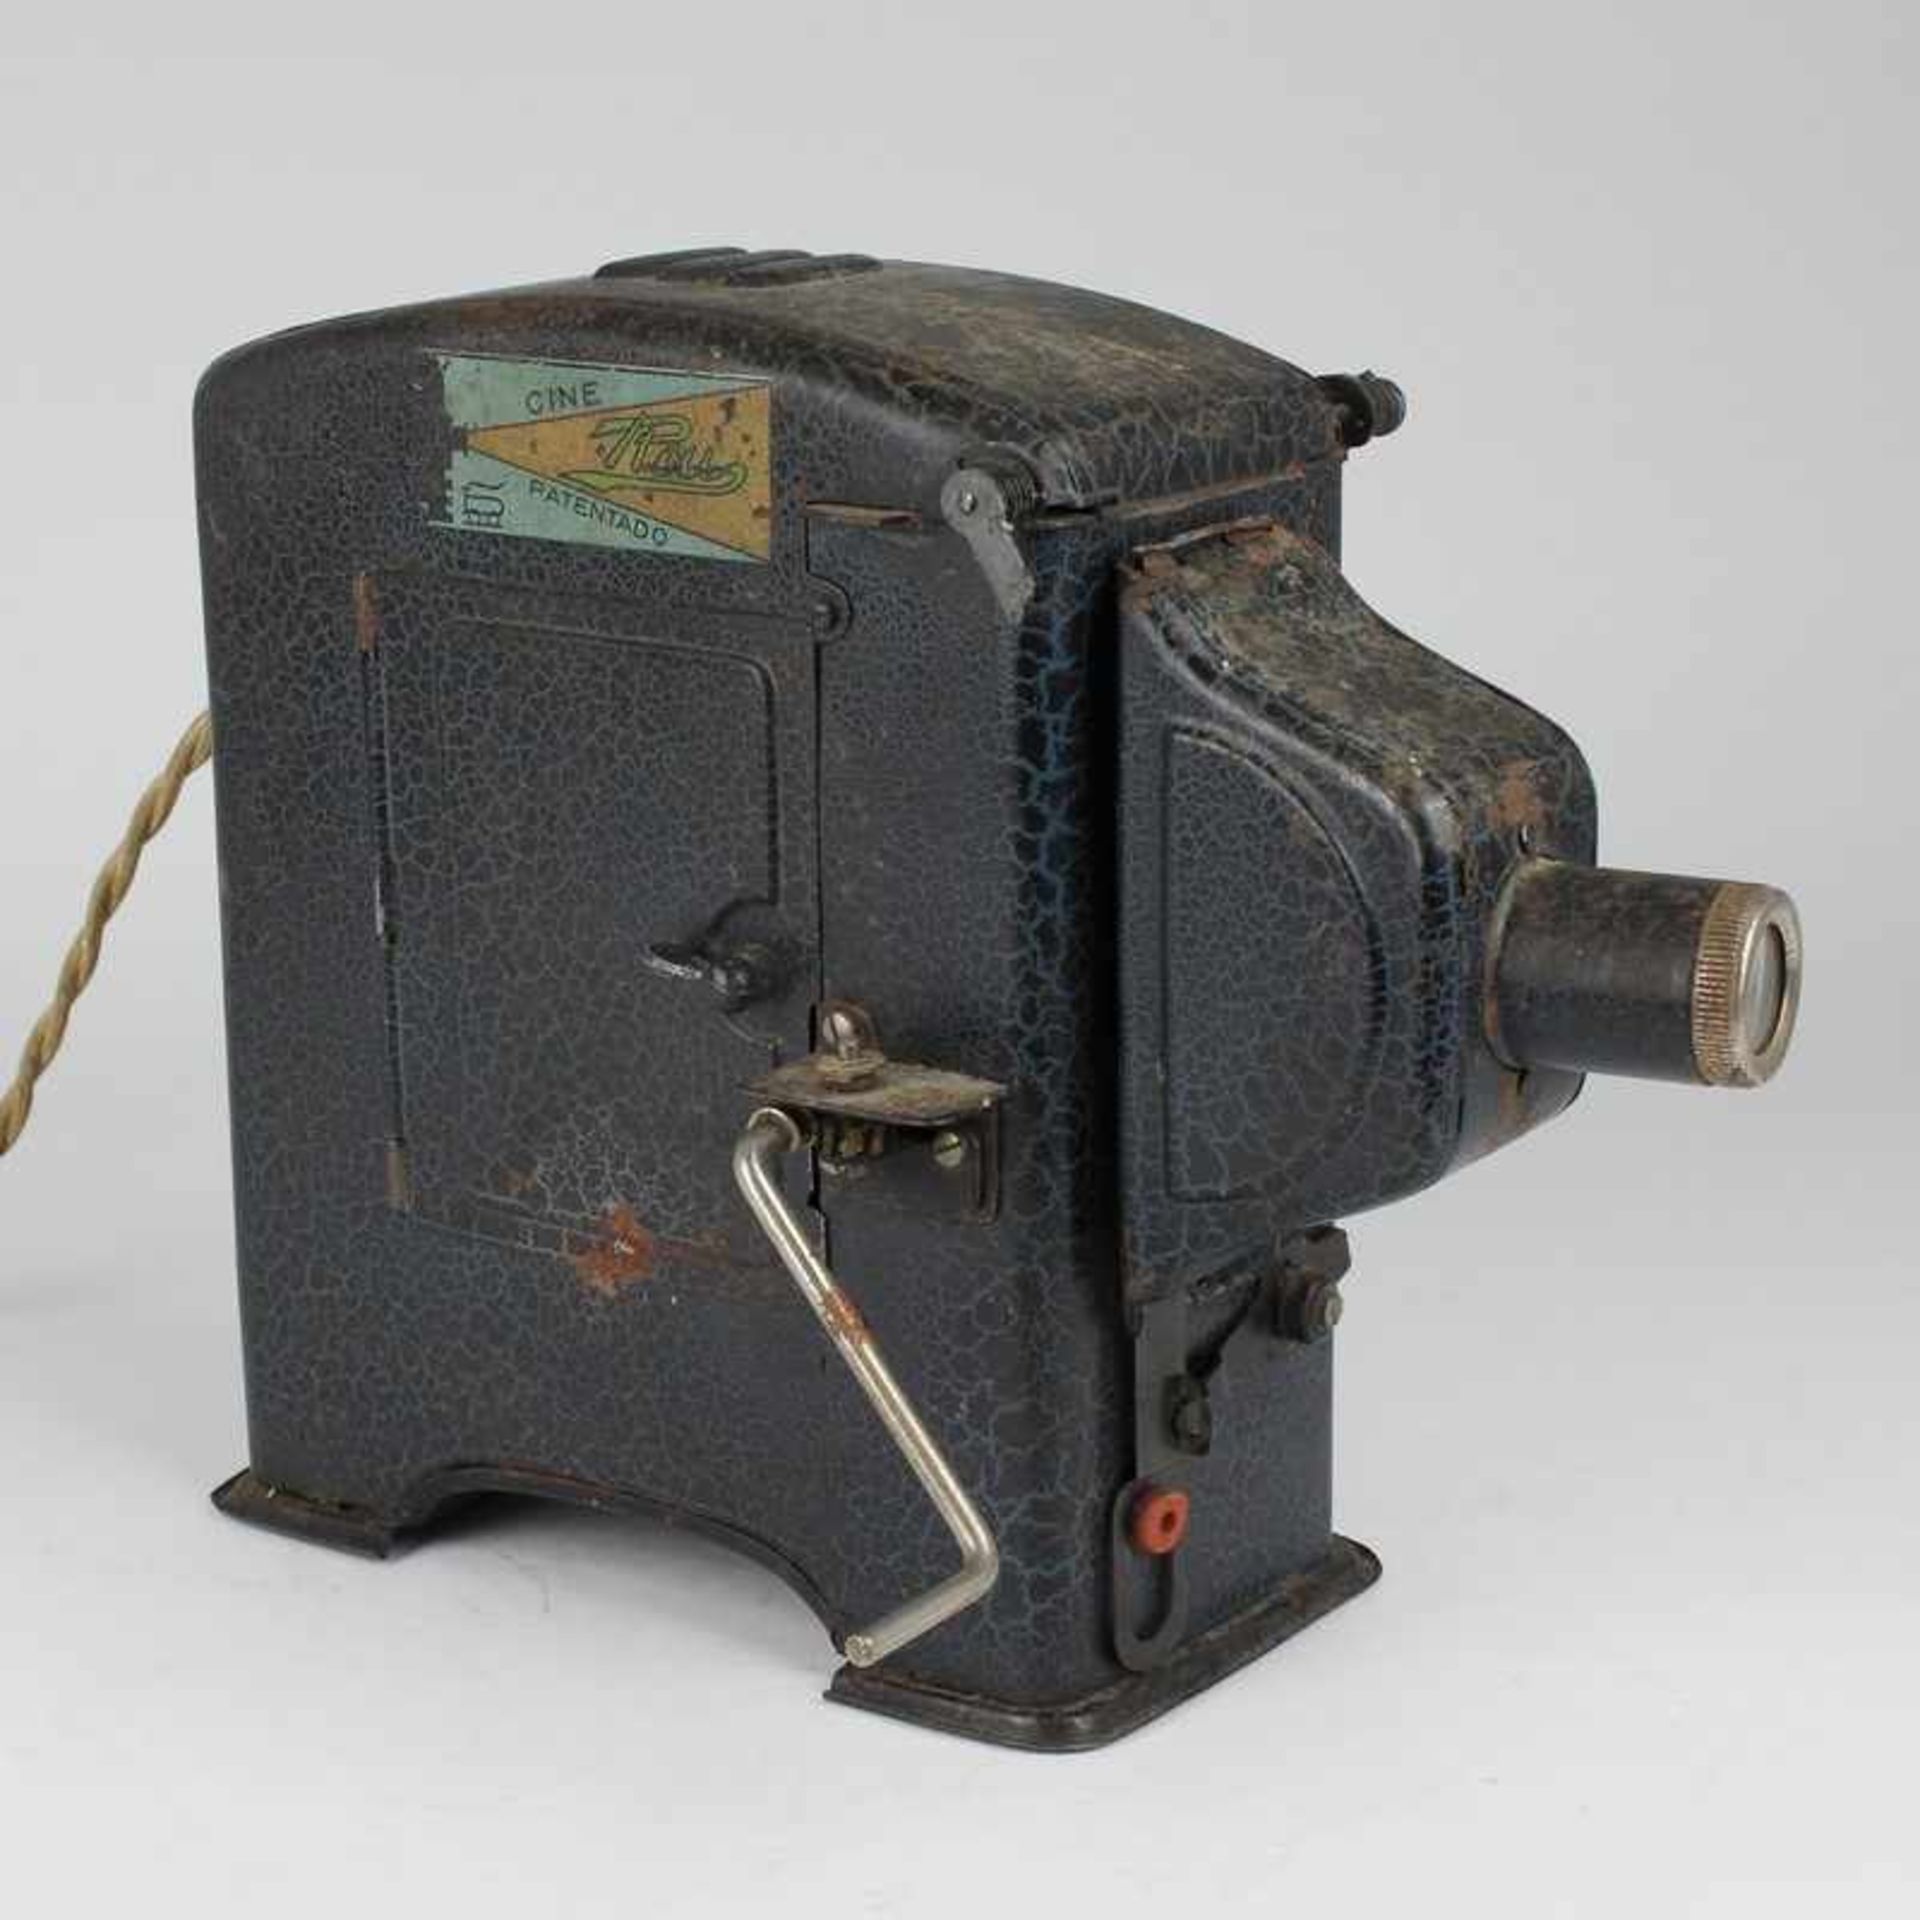 Blechspielzeug Filmprojektor, gem. Cine Rai Patentado, Spanien, 1930er J., elektrisch, Kurbel, Teile